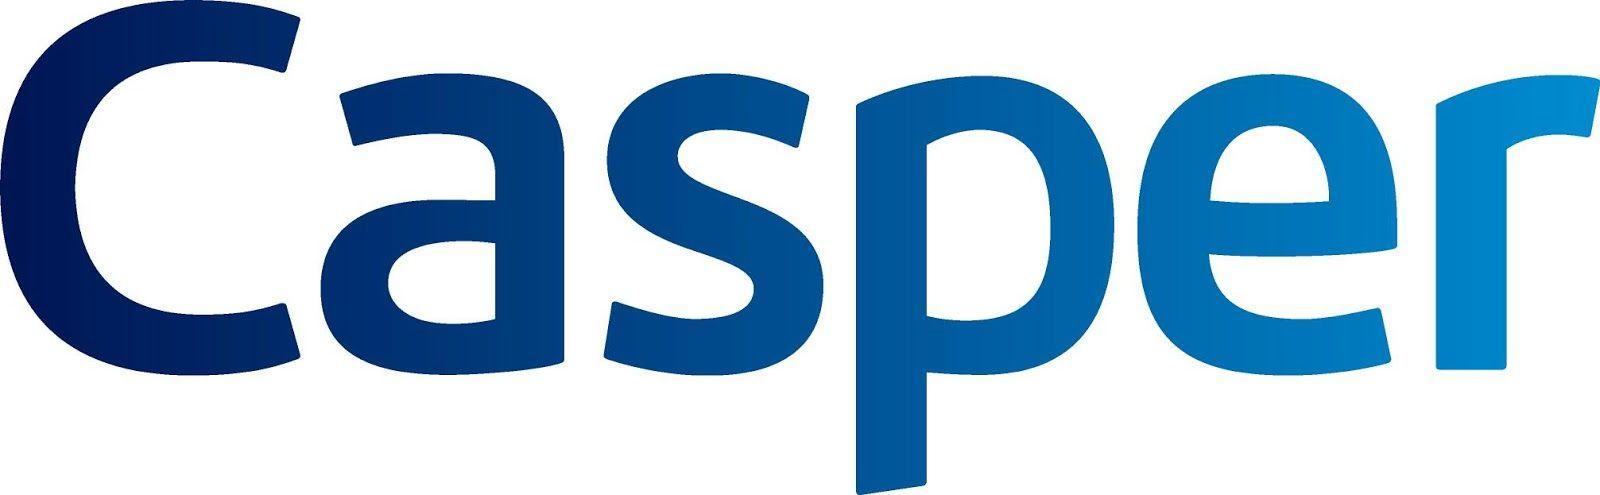 Casper Logo - 5f70f Casper Logo * Cepfacto Garanti Hizmetleri Garanti